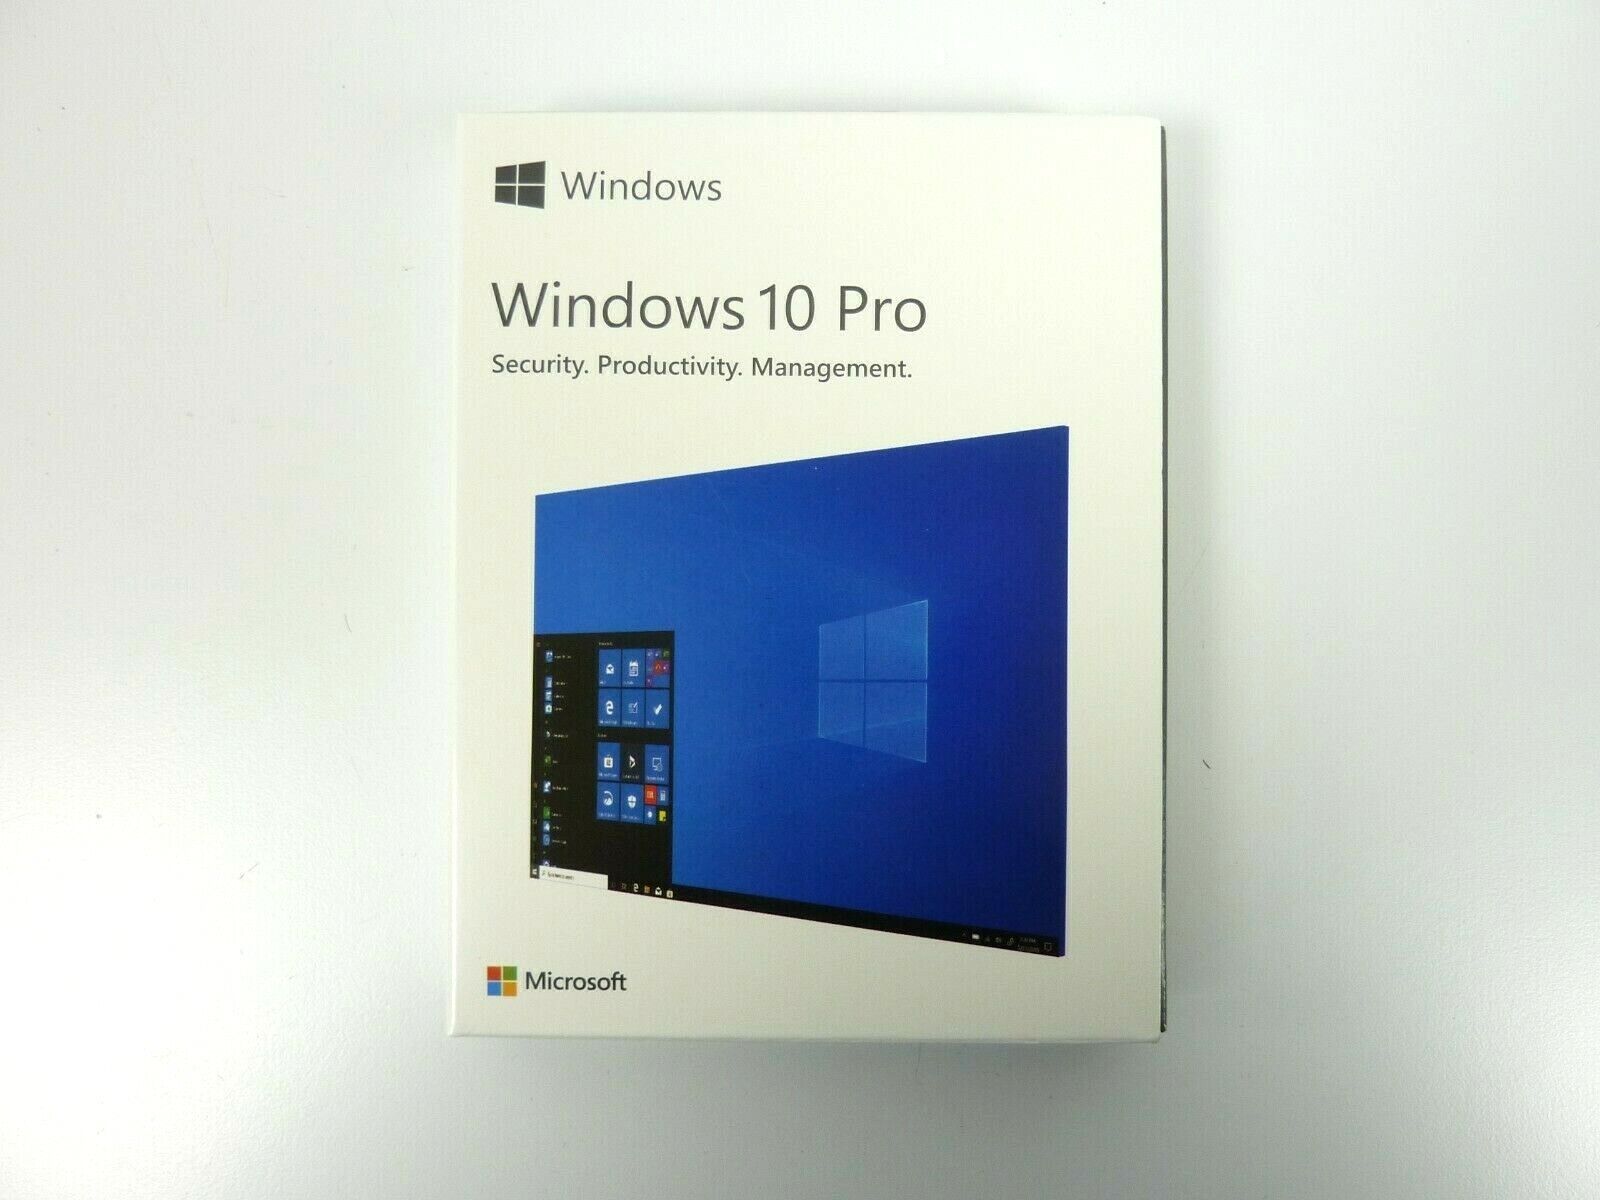 Microsoft Windows 10 Professional Pro 32/64bit USB Kit Package Sealed Retail box